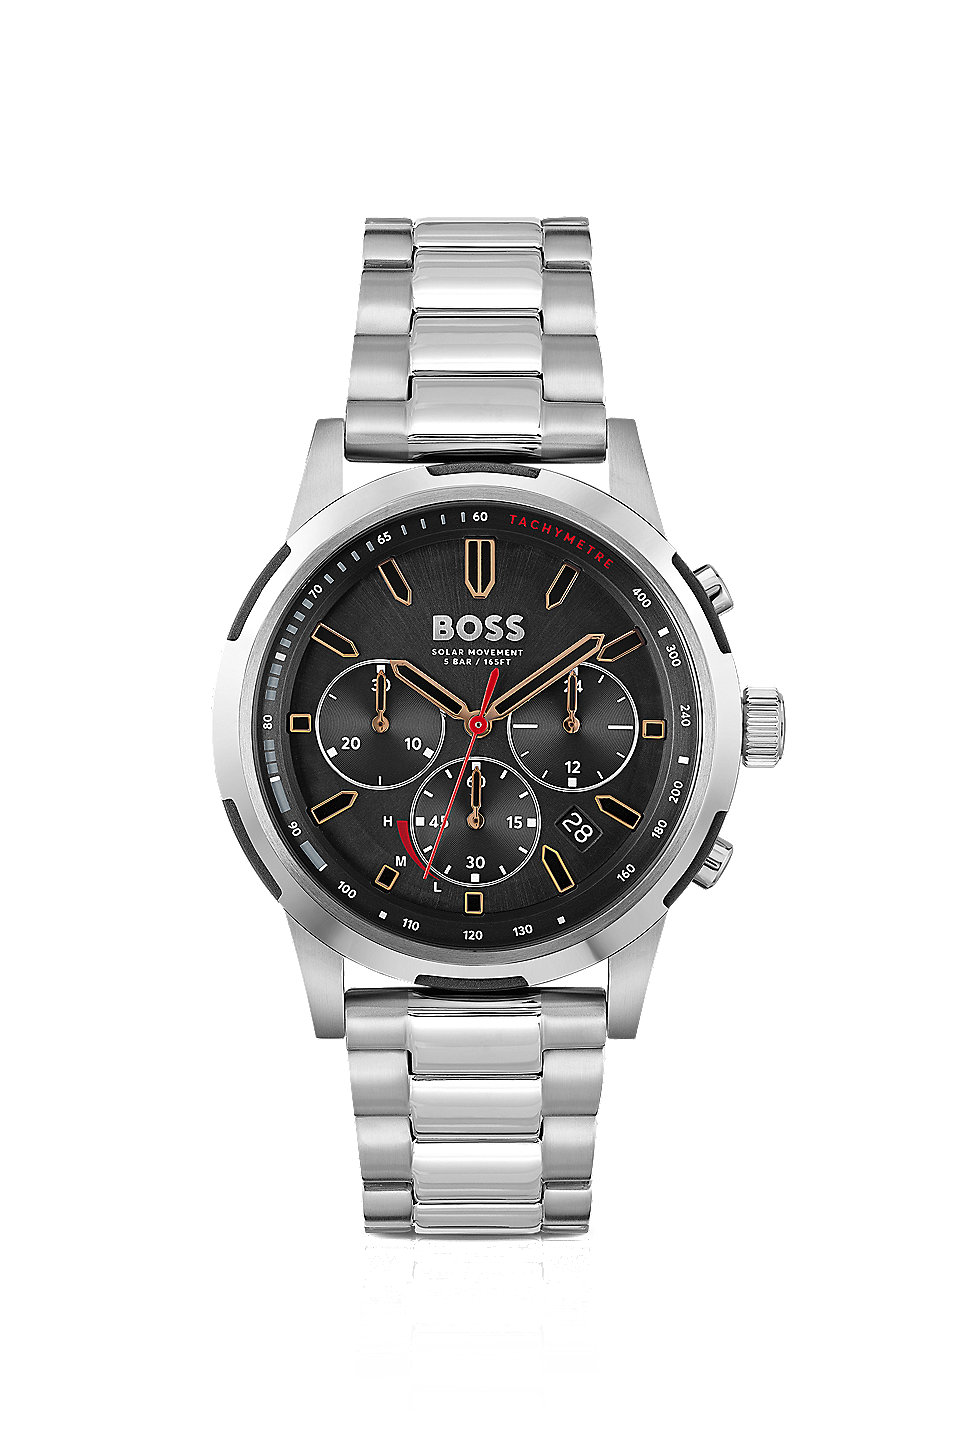 with chronograph BOSS Solar-powered watch - steel bracelet